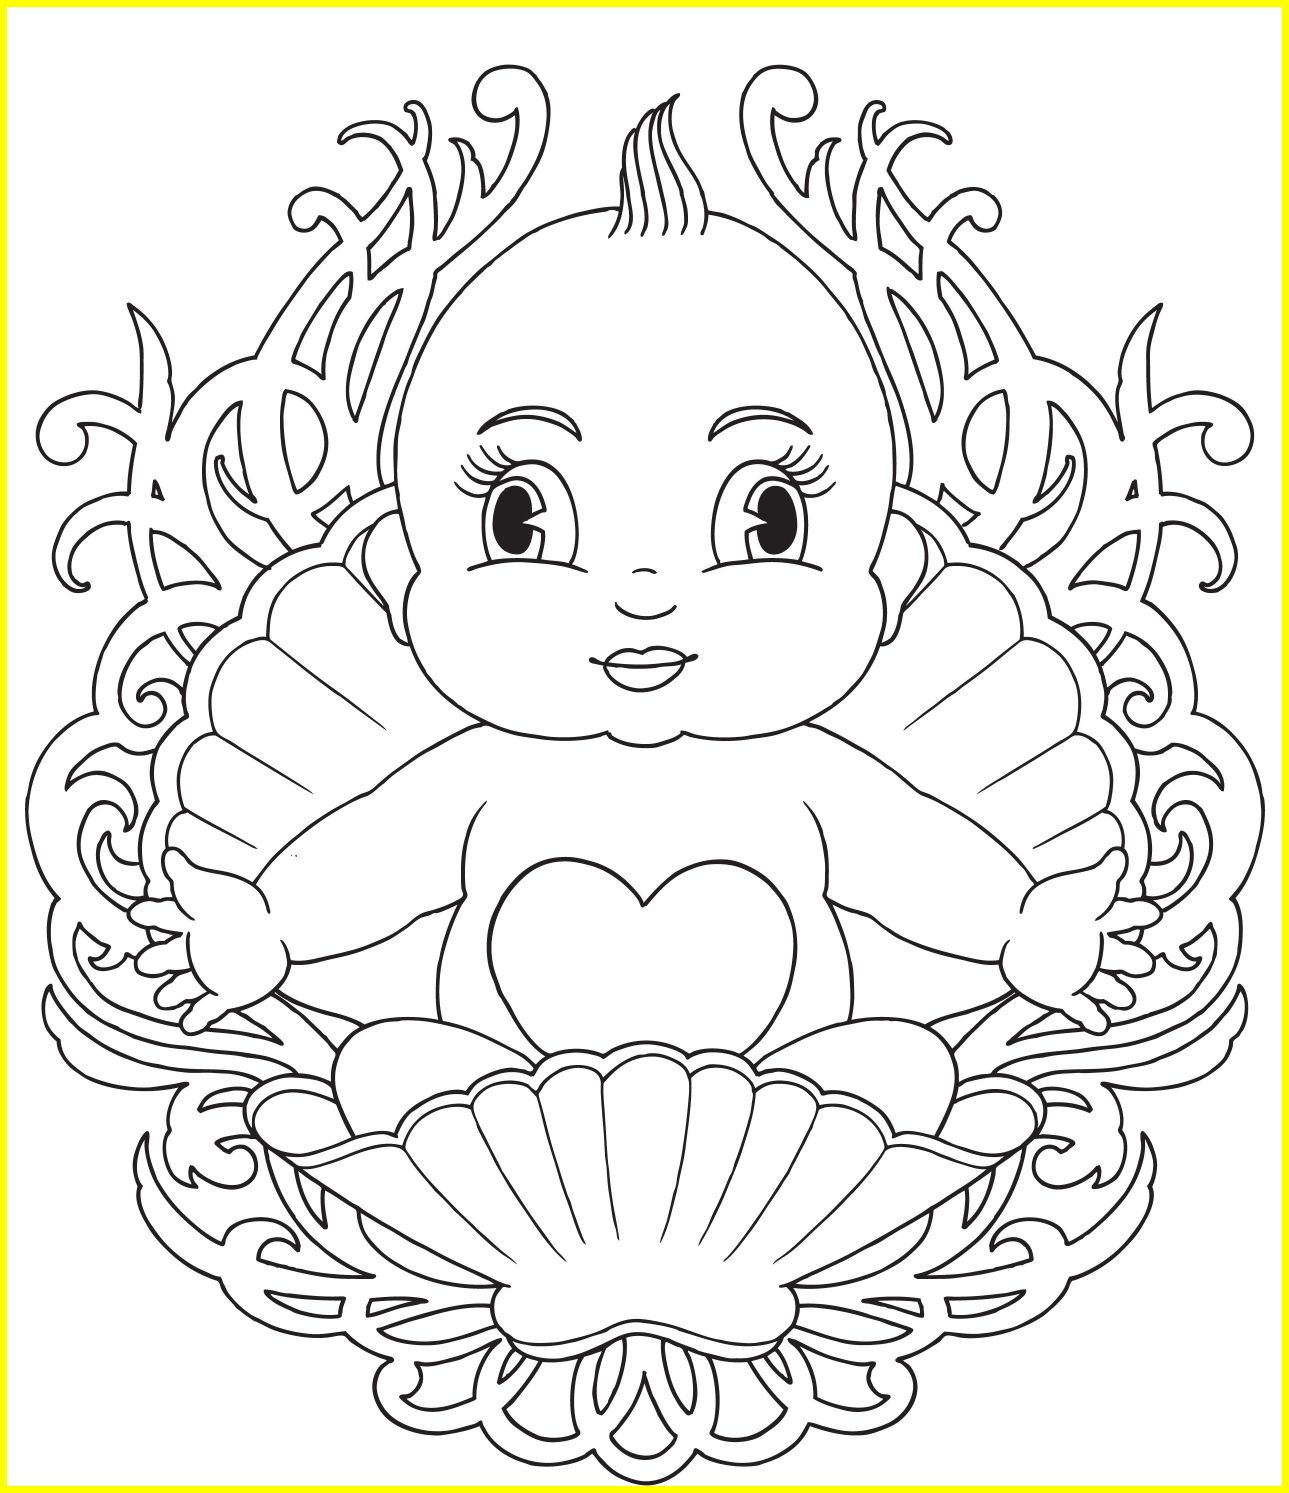 Baby Rosalina Coloring Pages at GetColorings.com | Free printable